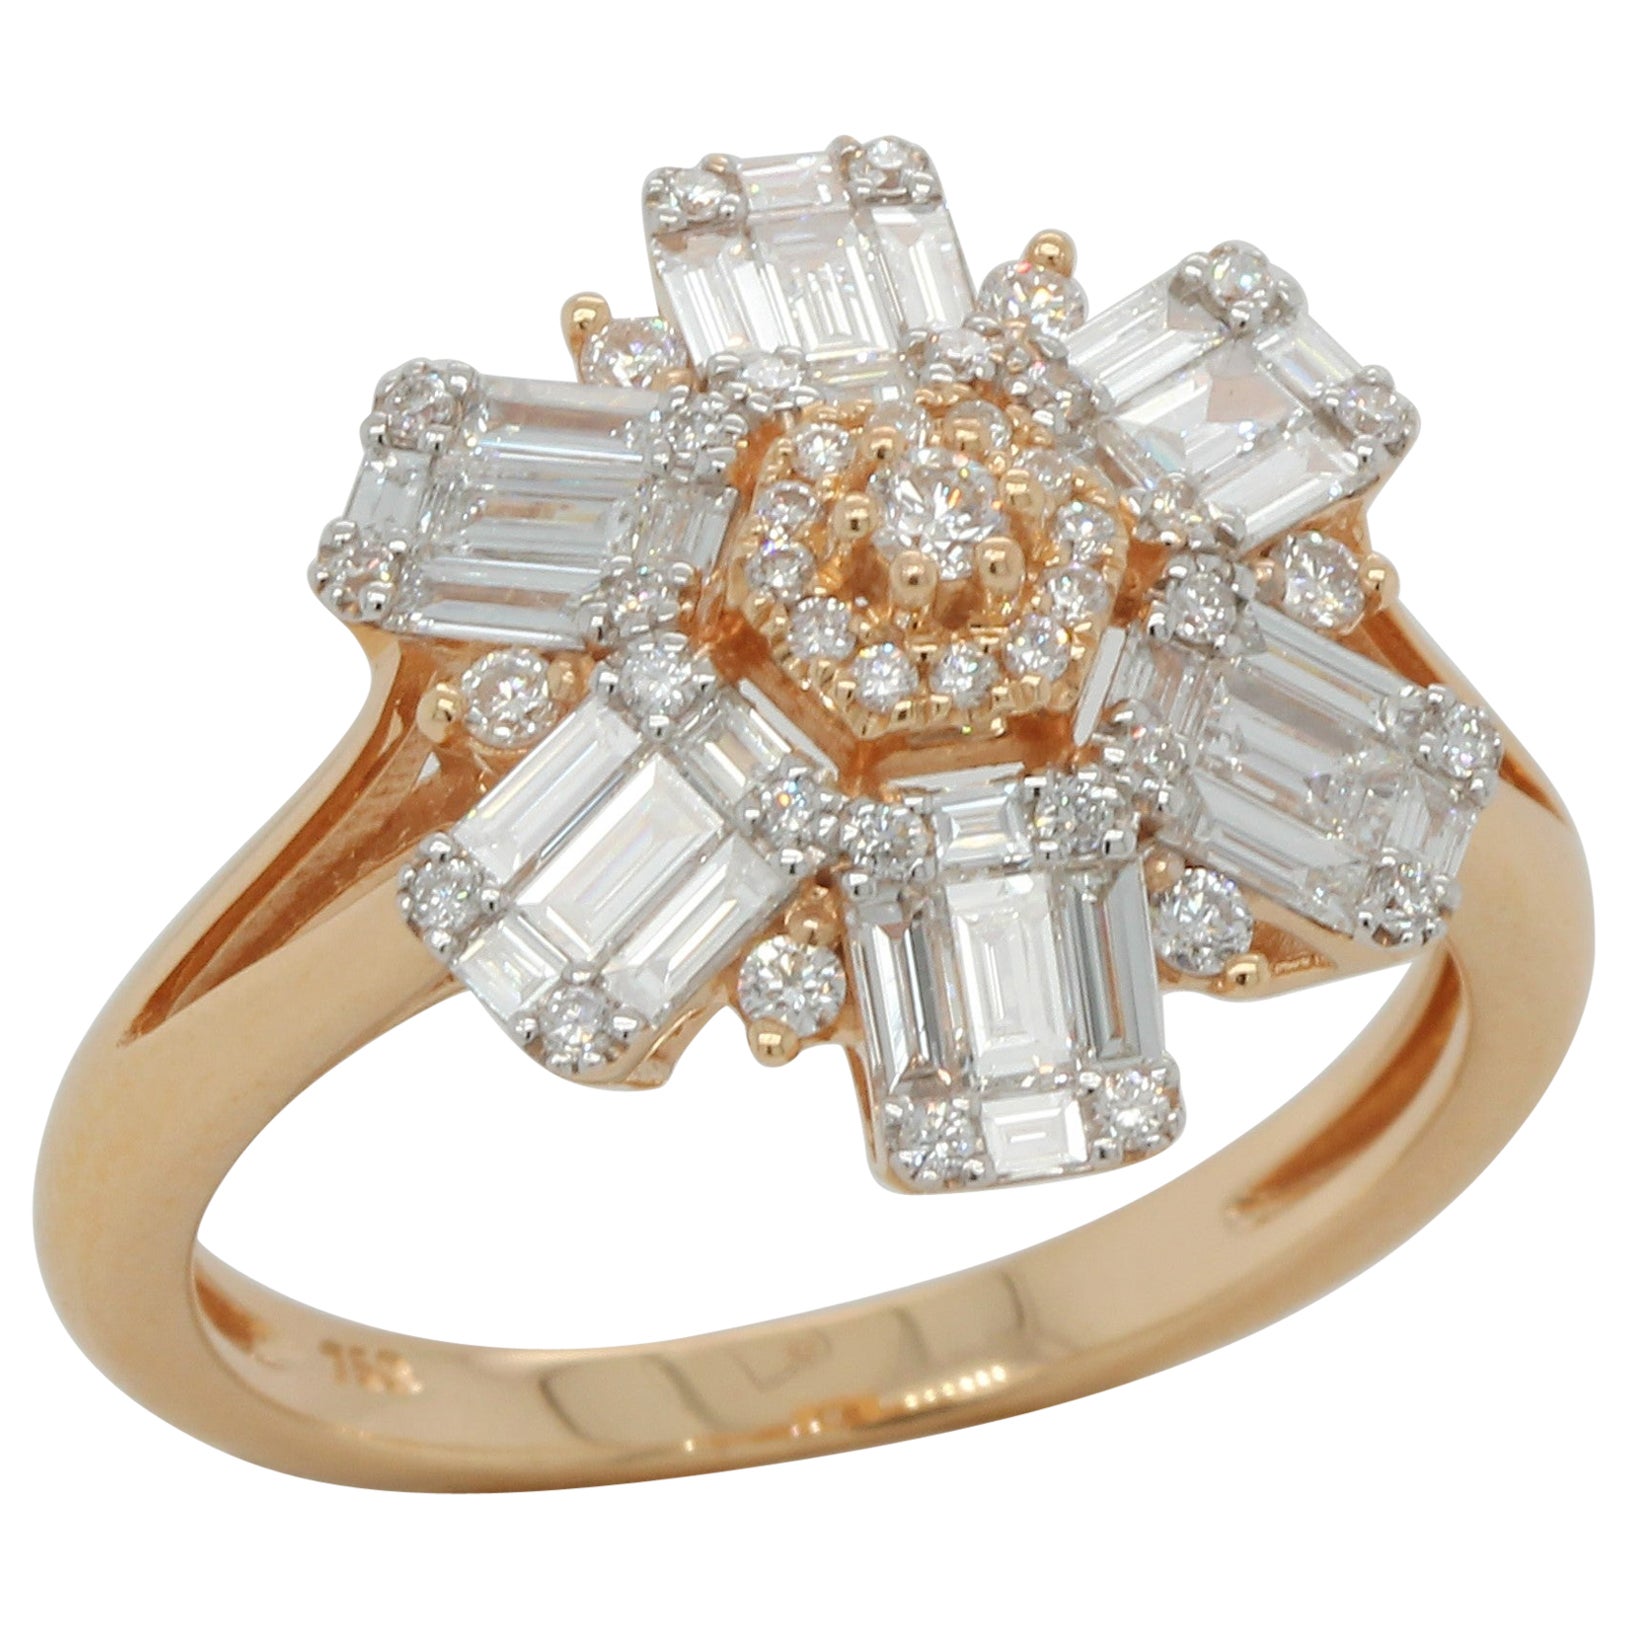 0.99 Carats Diamond Illusion Wedding Ring in 18 Karat Gold